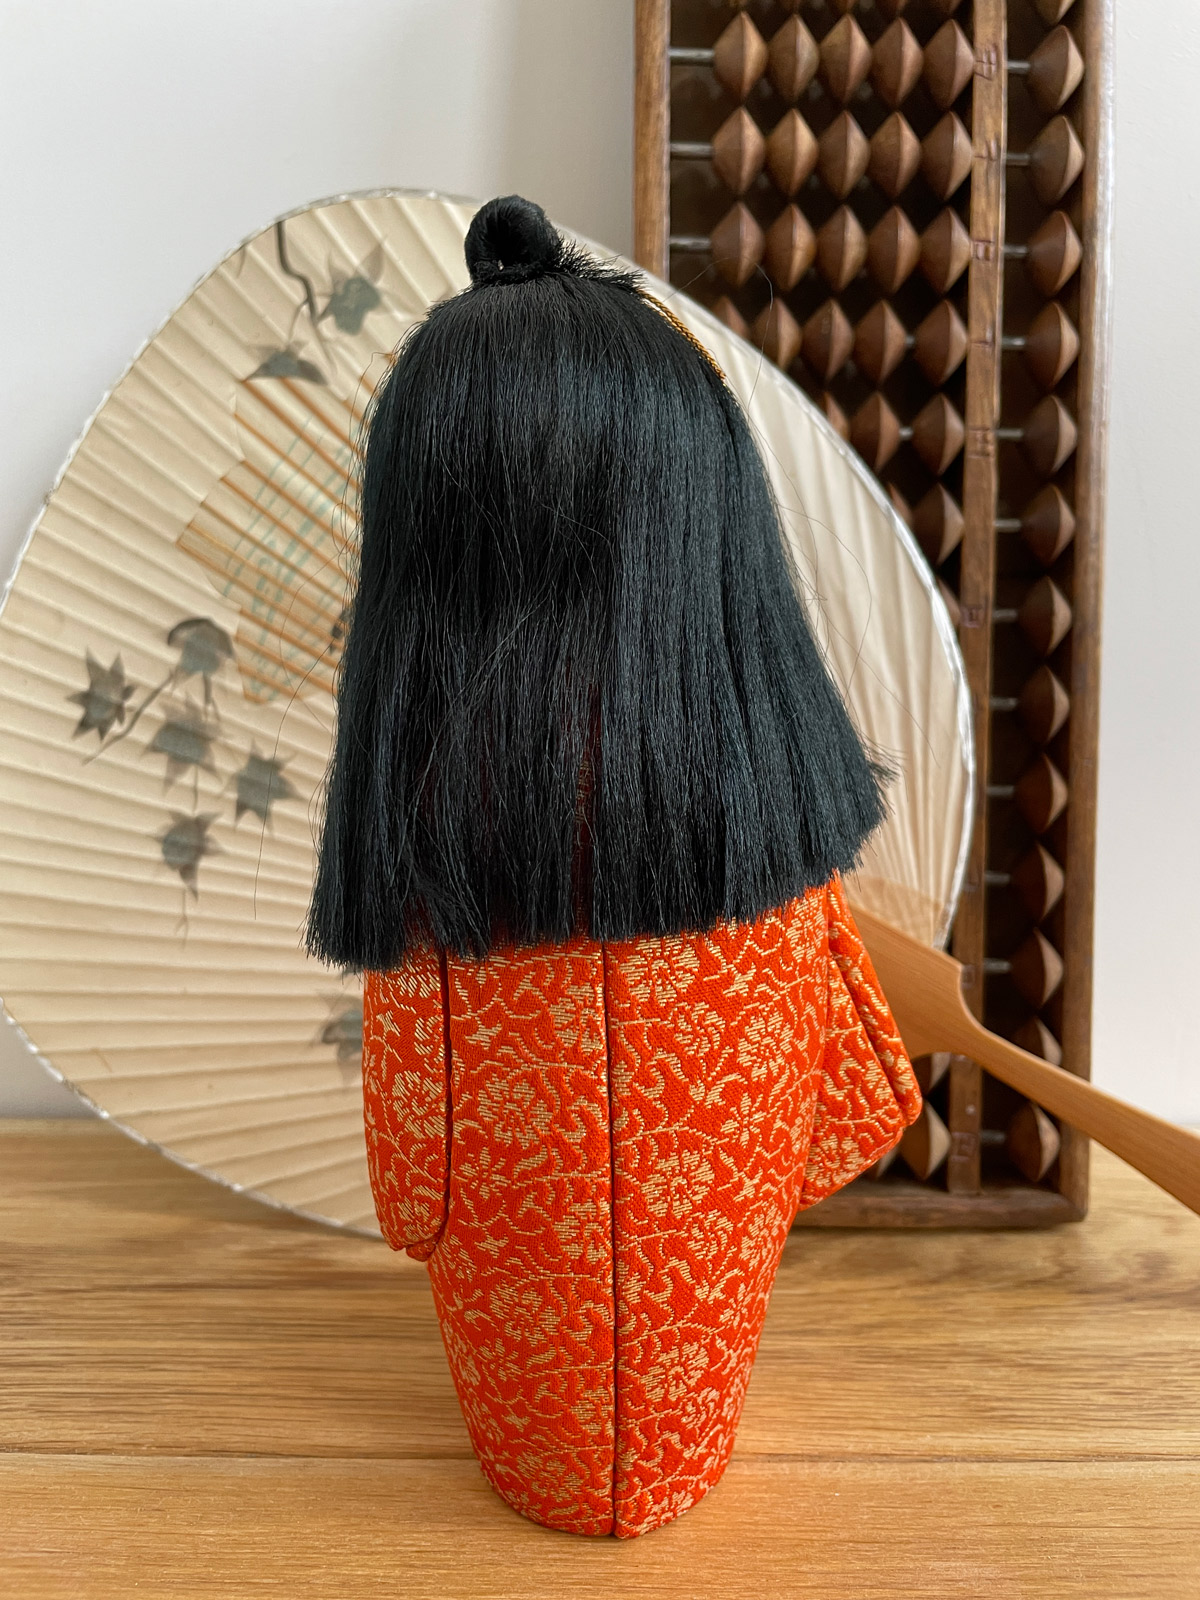 Kimekomi doll wearing bright orange Kimono